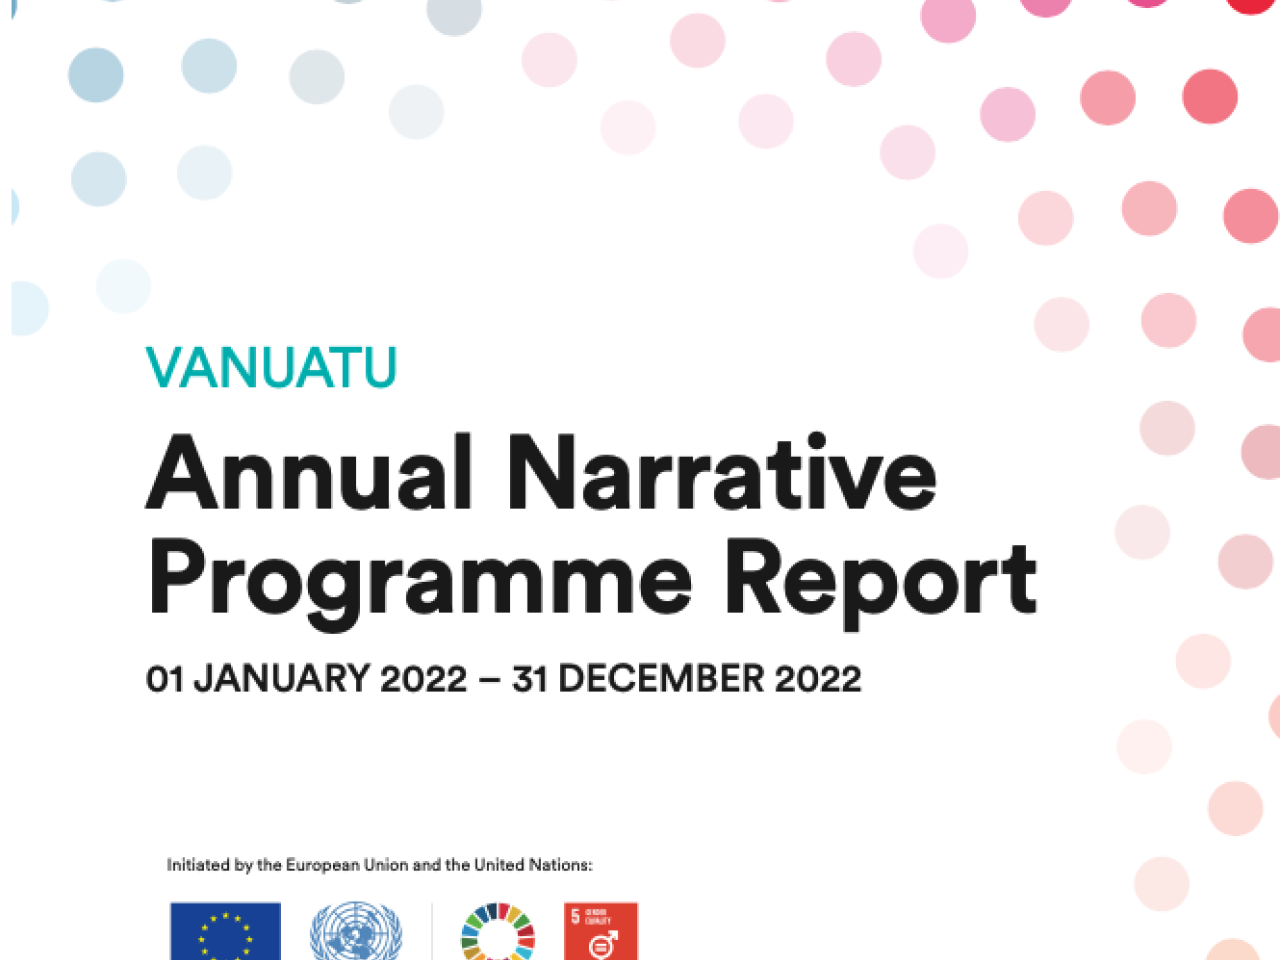 Spotlight Initiative Vanuatu Report 2022